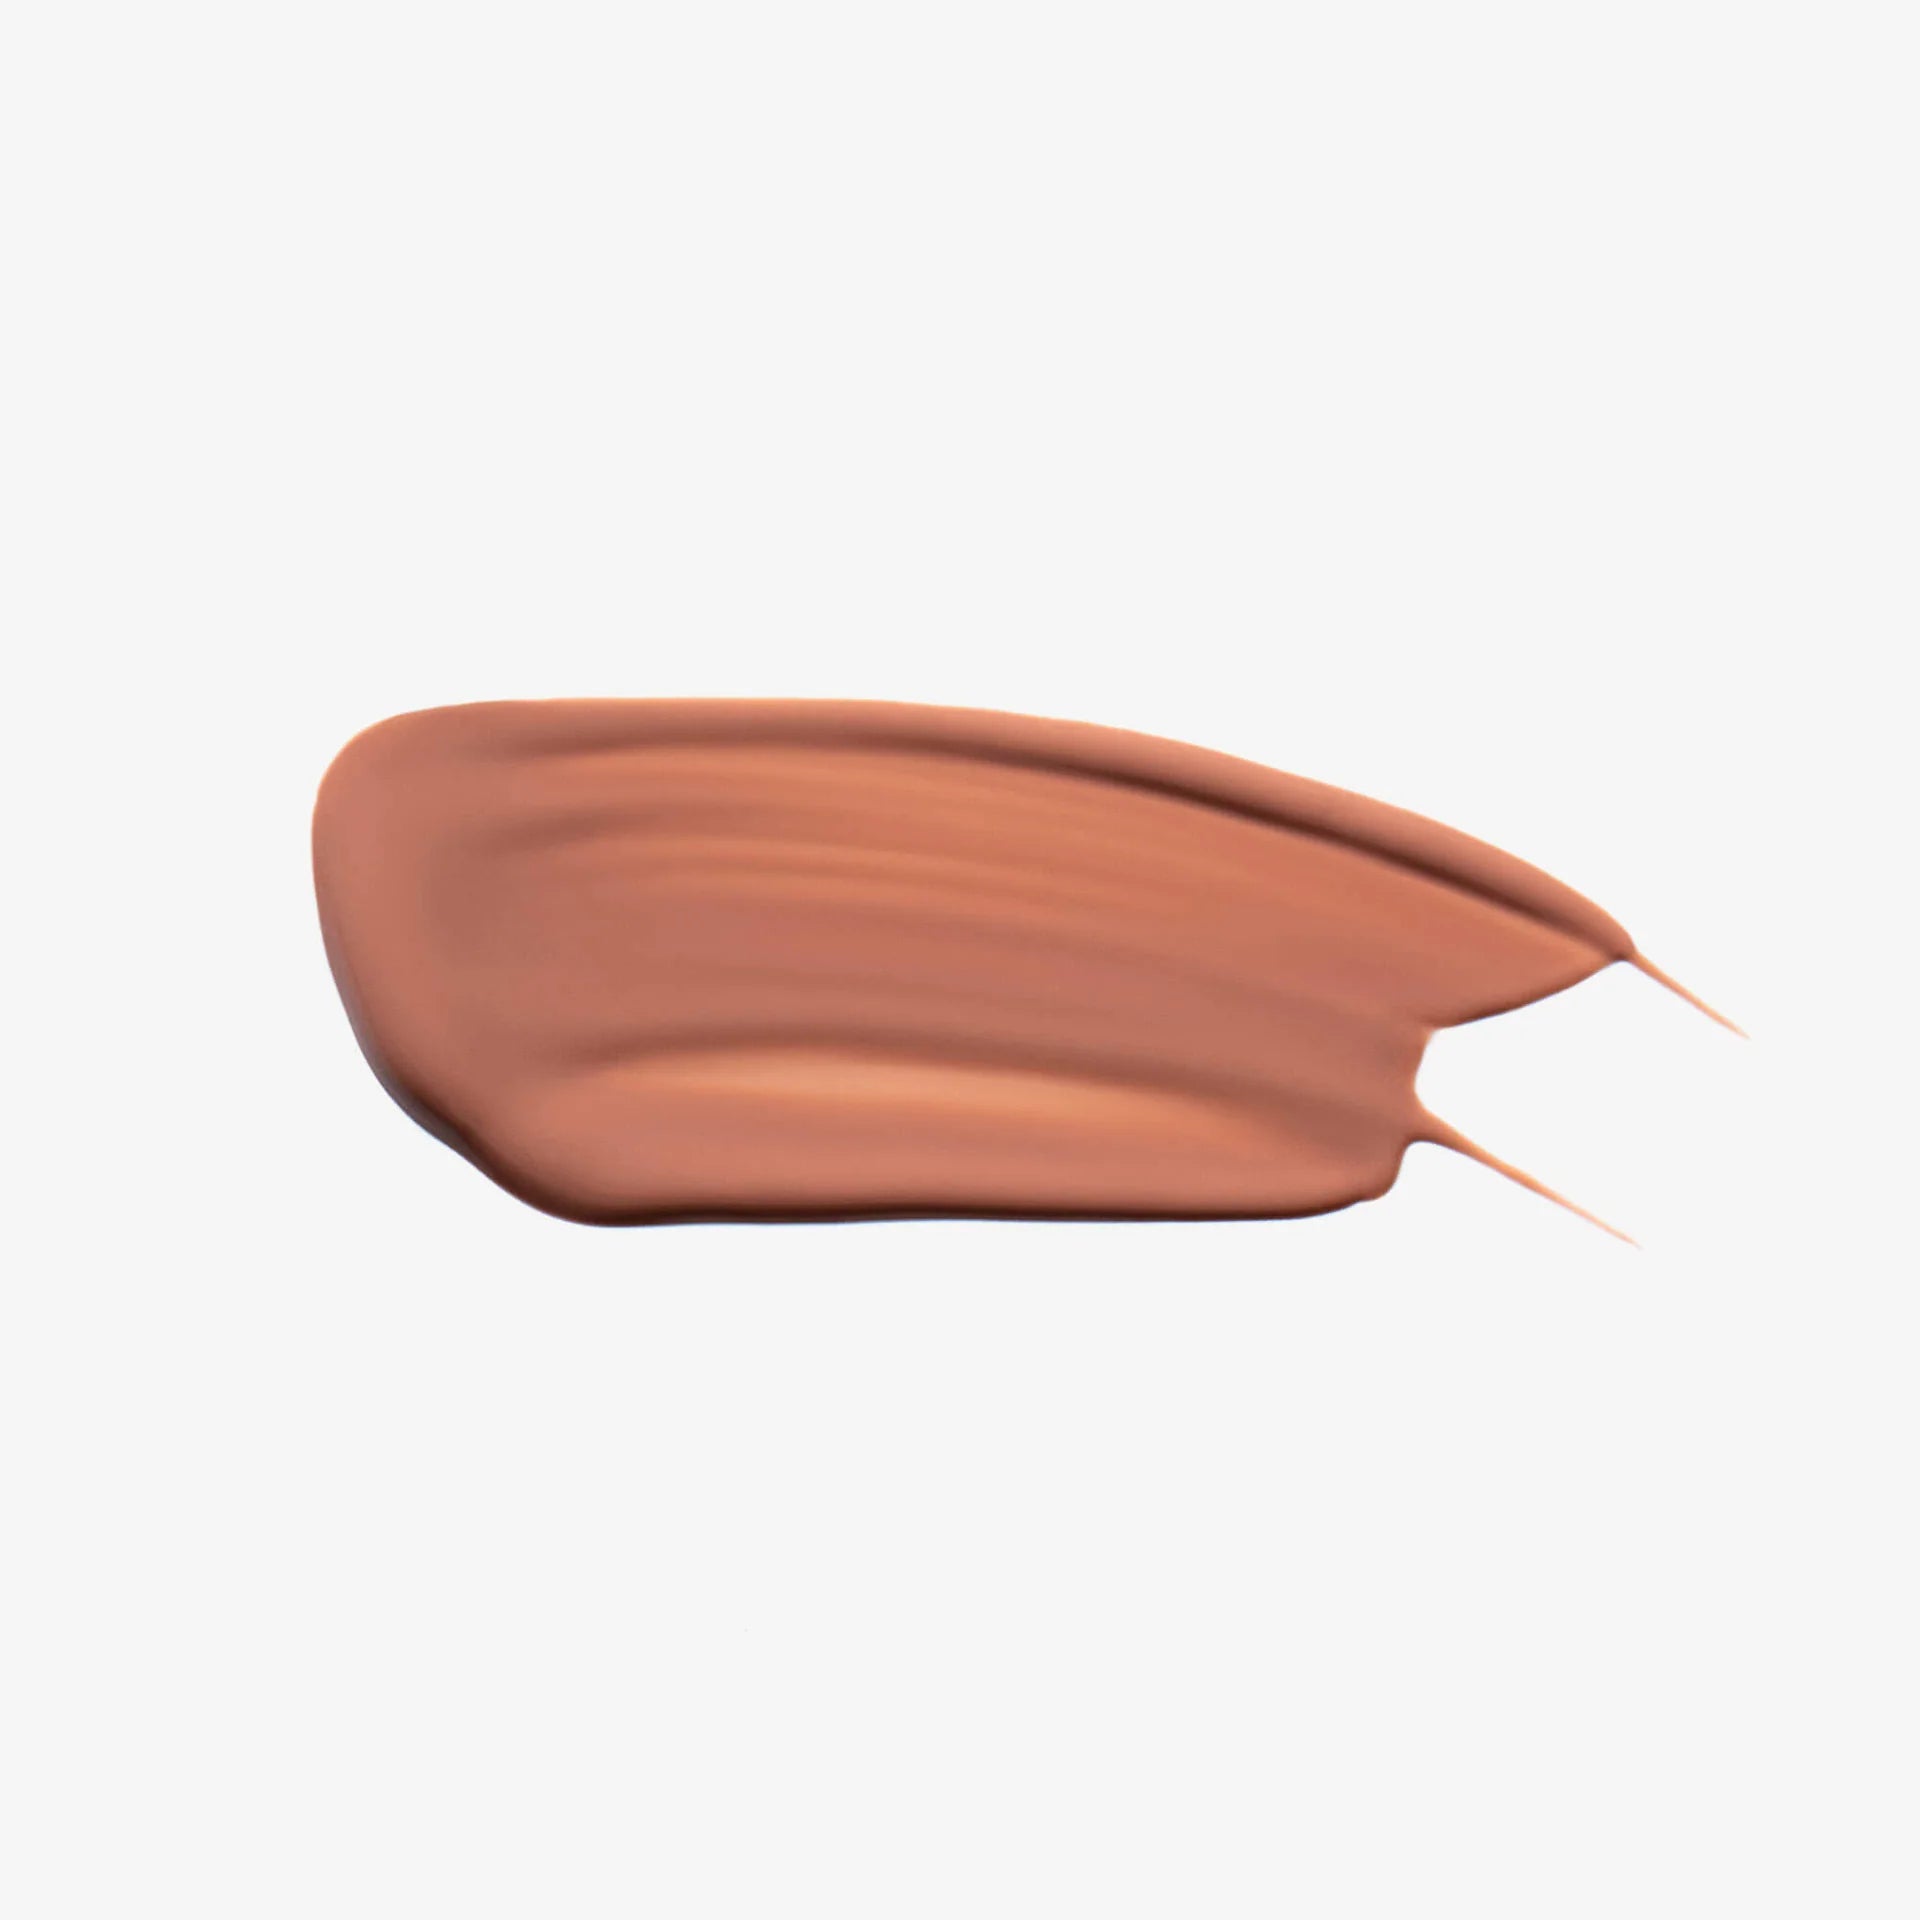 Peachy Nude |Lip Gloss Swatch Shade Peachy Nude